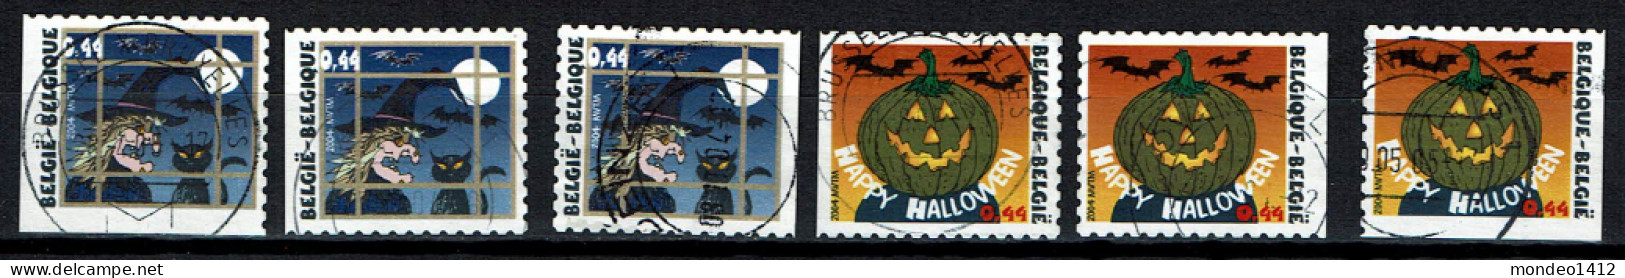 België OBP 3324/3325 - Halloween Pumpkin - Witch - Oblitérés